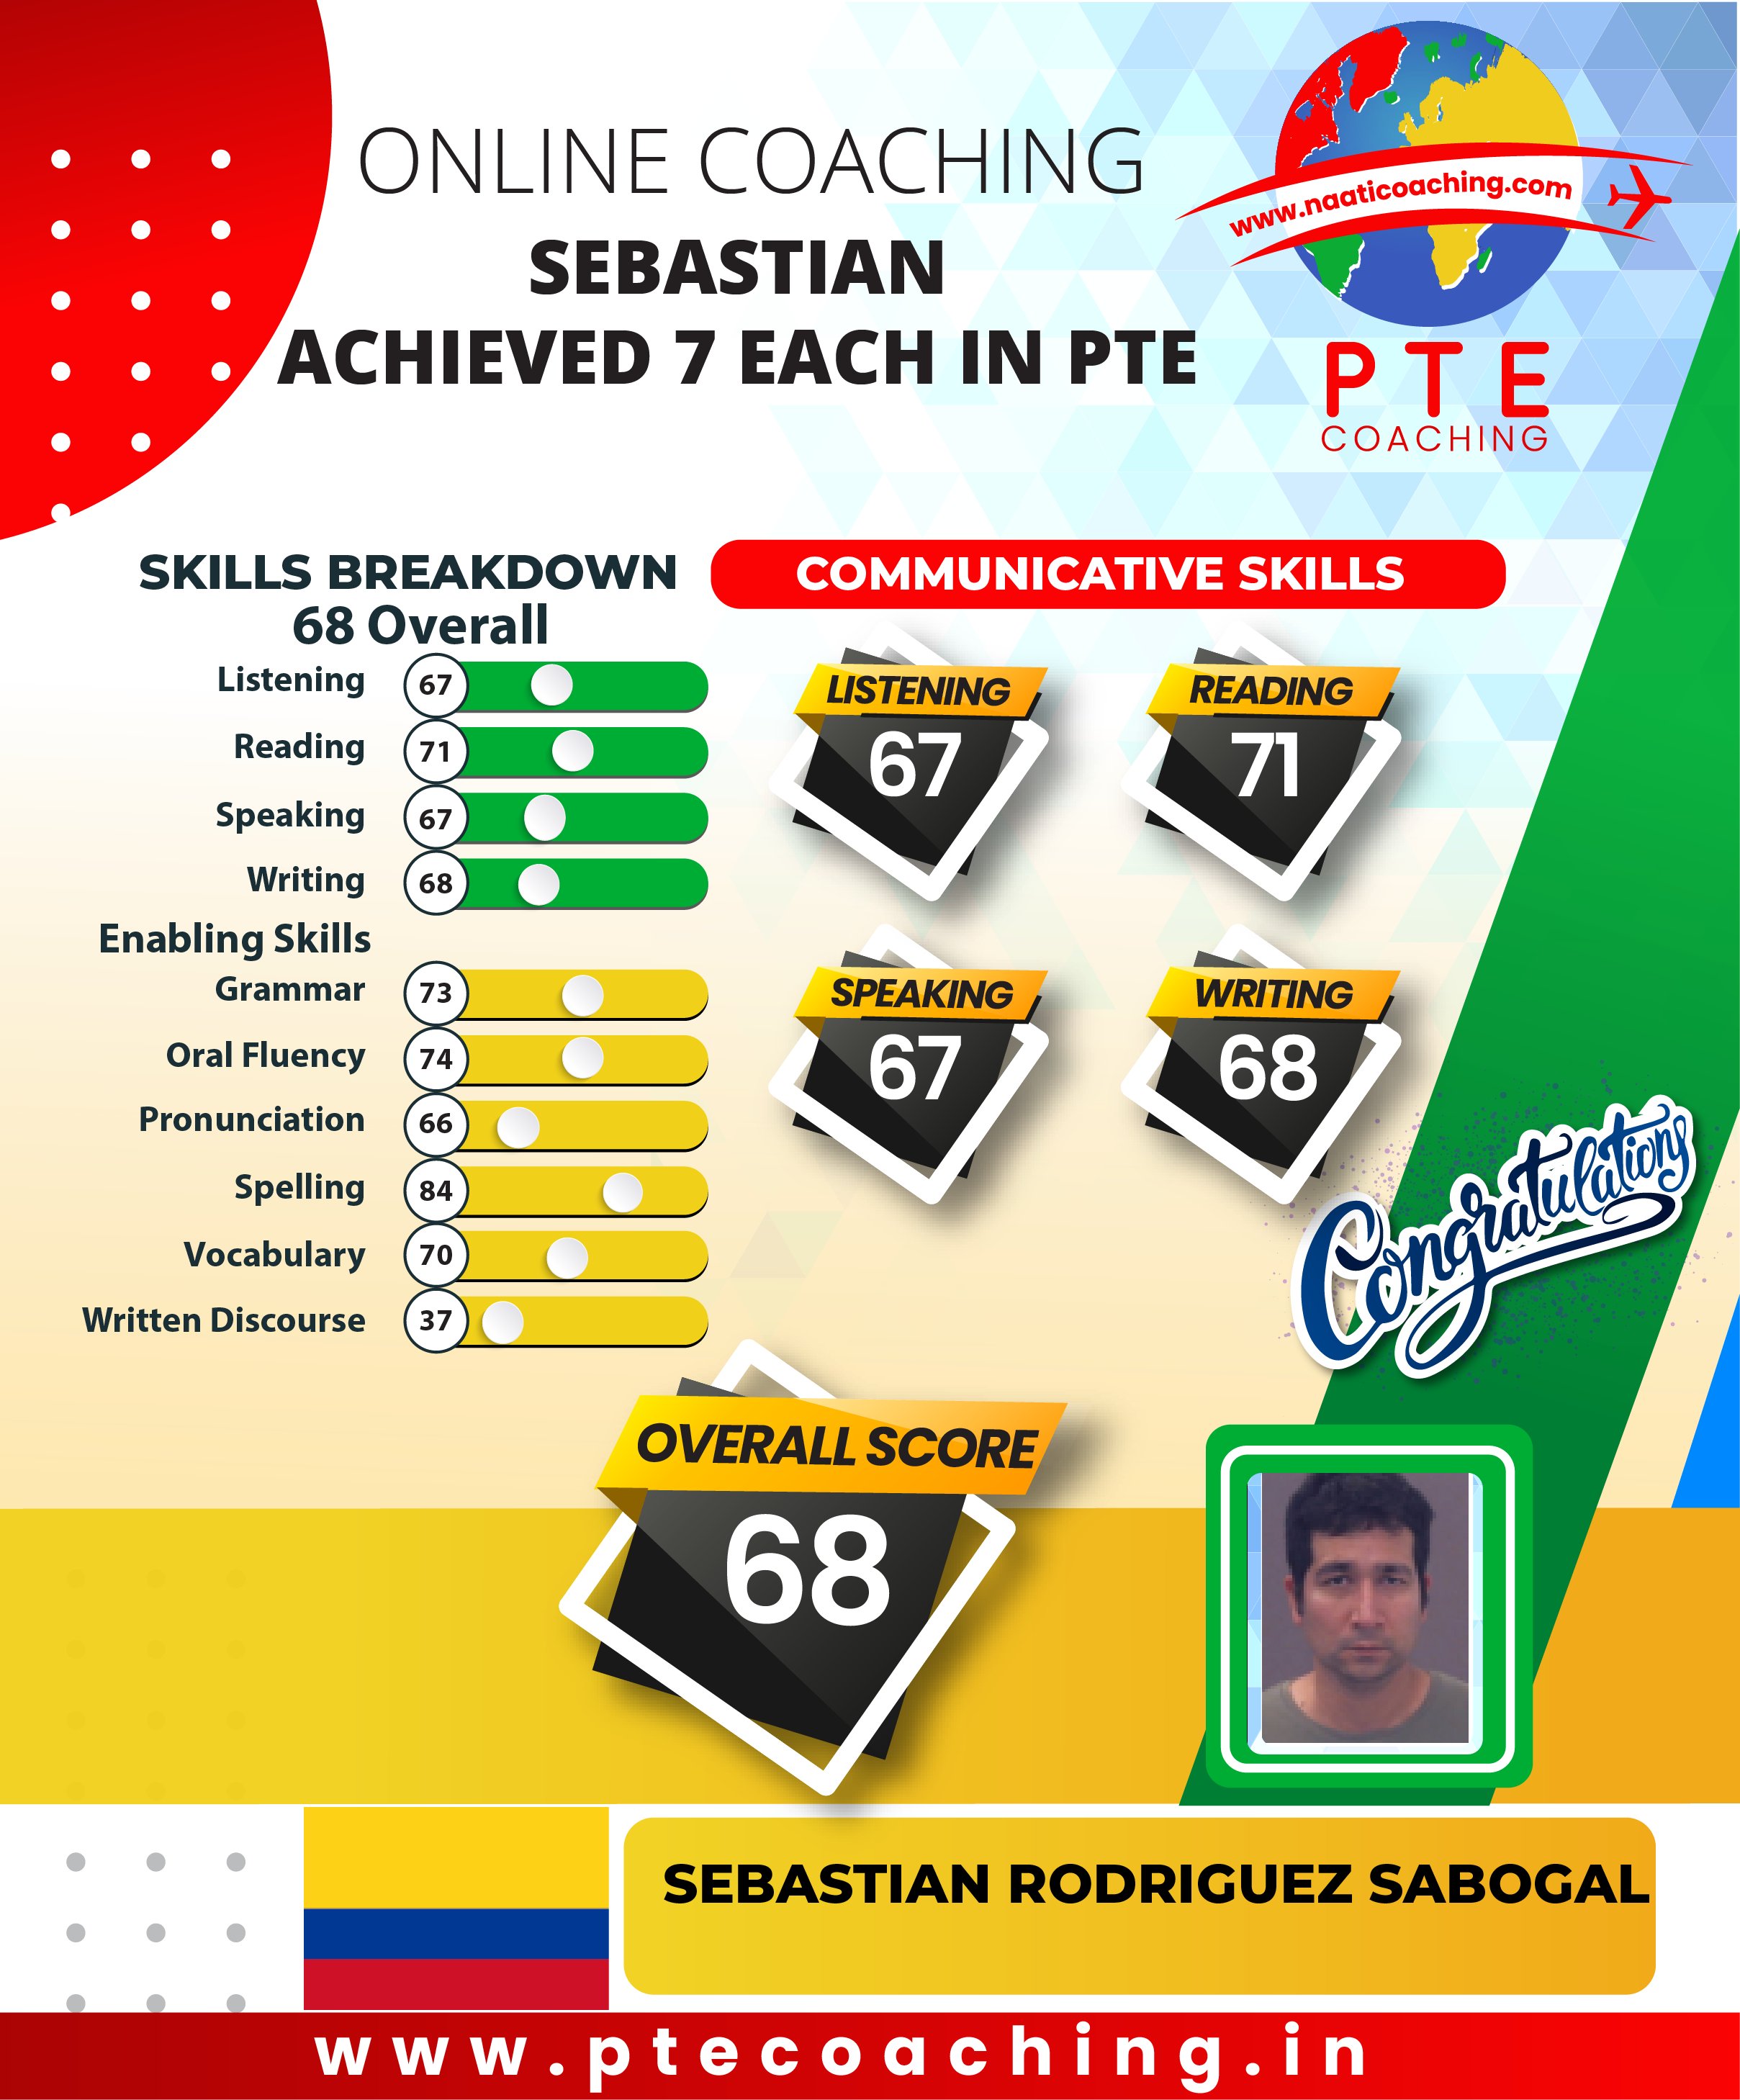 PTE Coaching Scorecard - Sebastian achieved 7 each in PTE